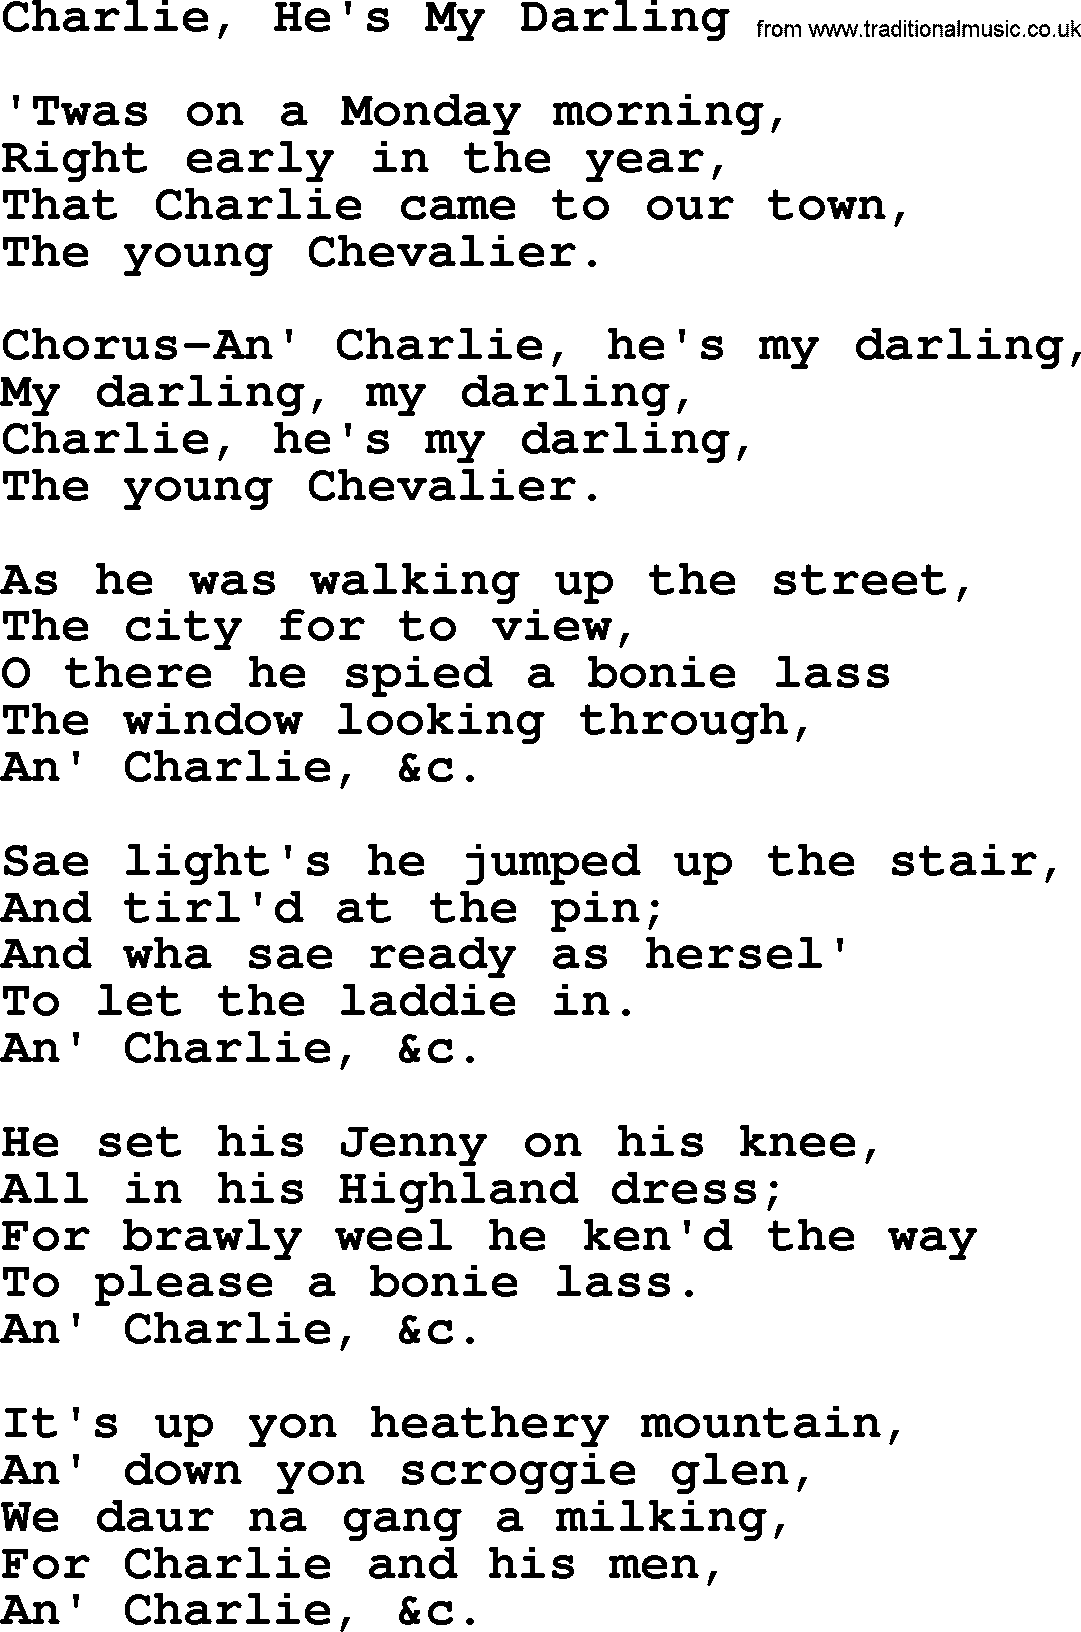 Robert Burns Songs & Lyrics: Charlie, He's My Darling